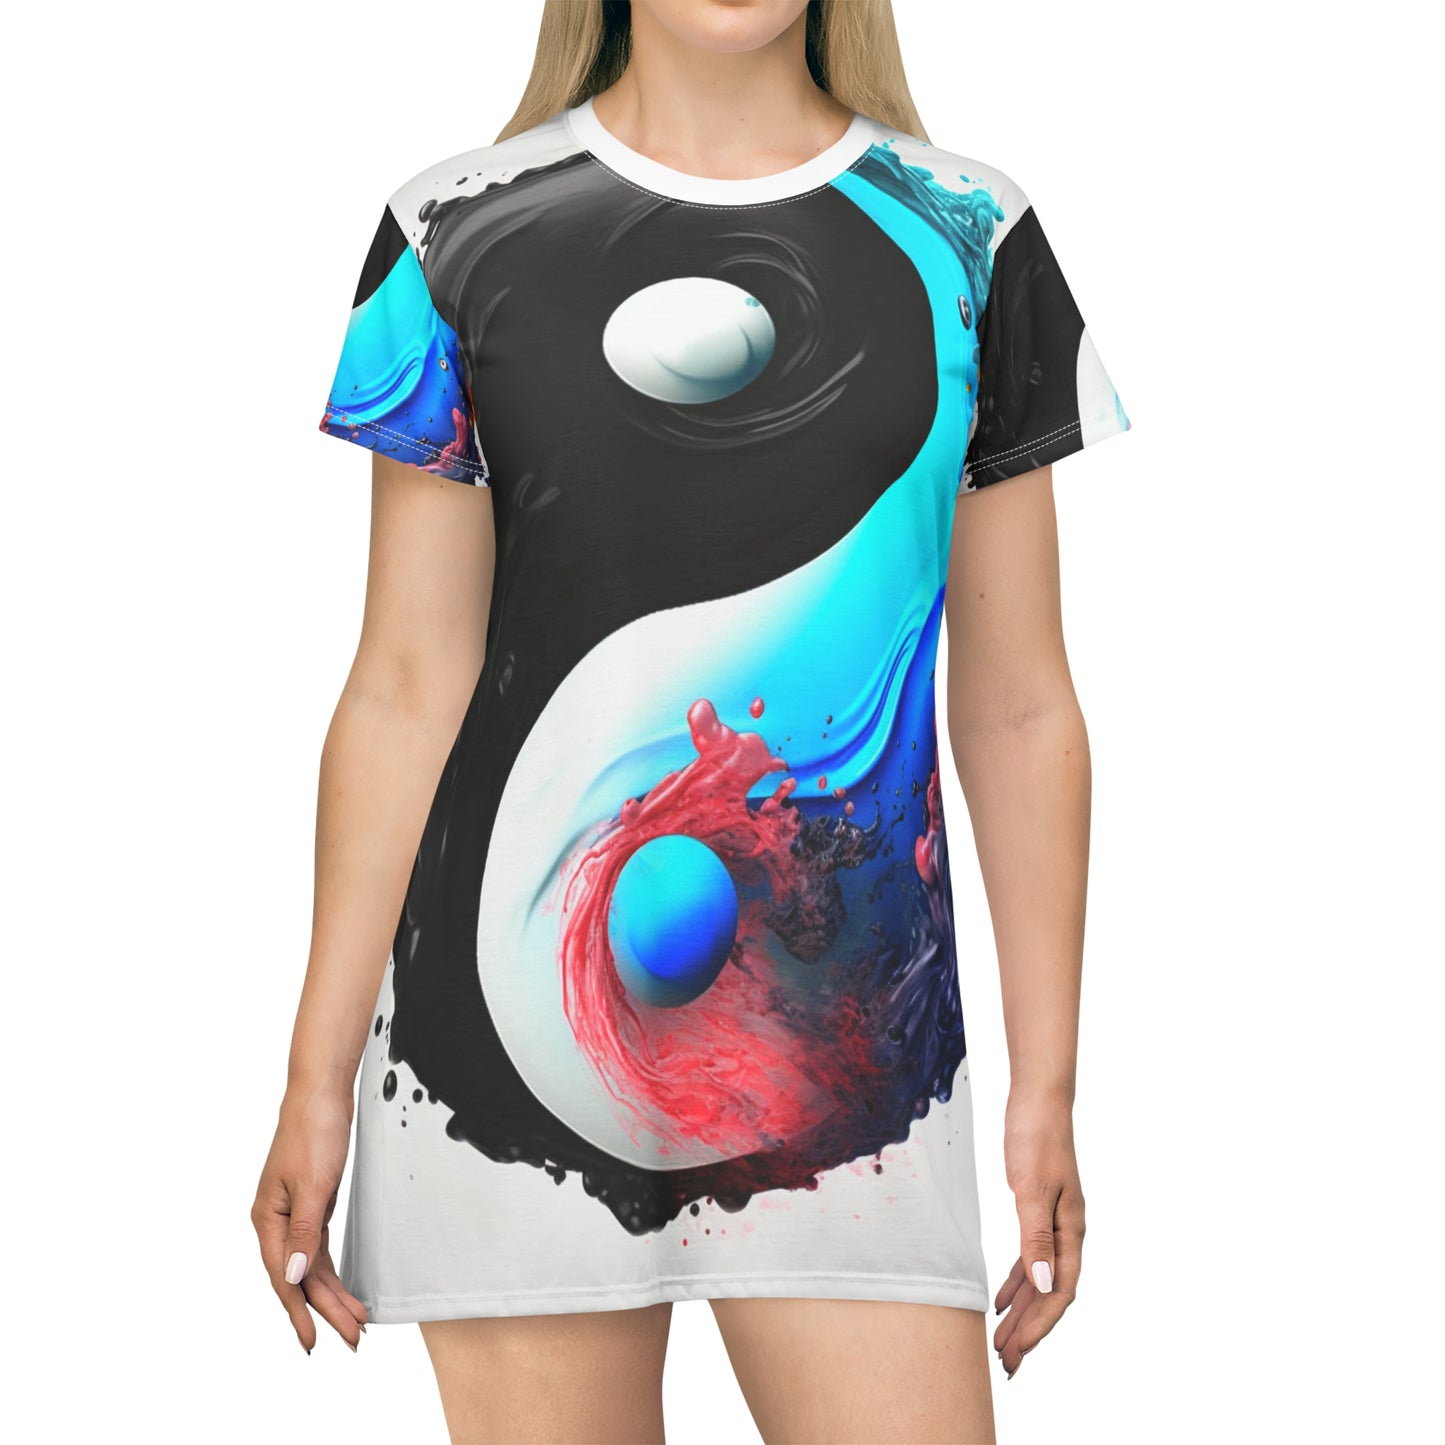 Yin Yang Symbol, Colorful Paint Style - Artistic Decor - T-Shirt Dress (AOP)